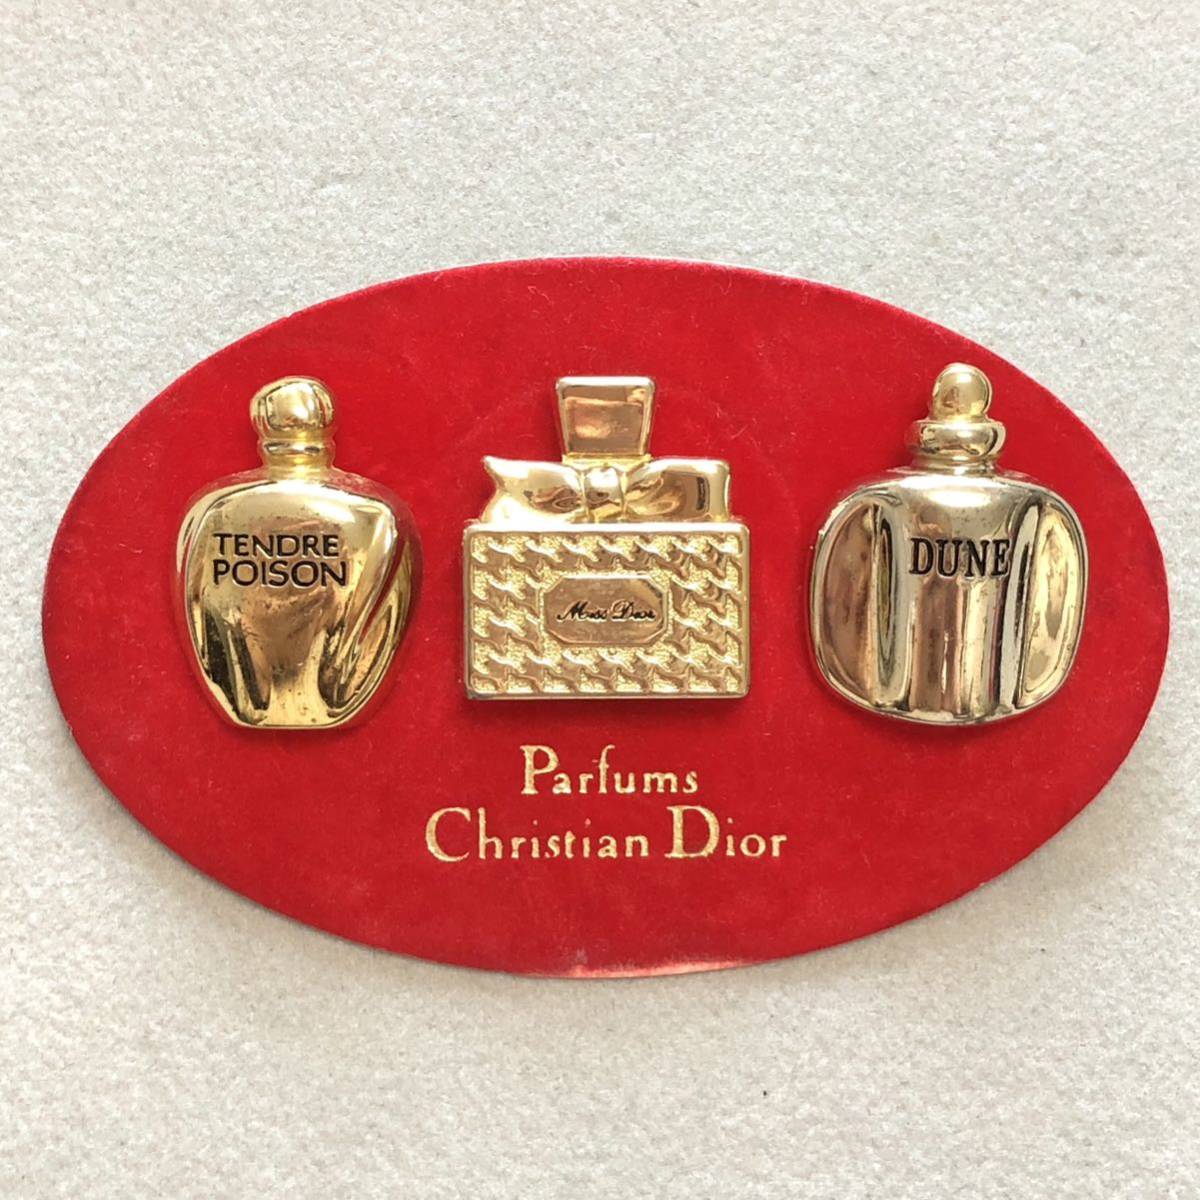 Christian Dior クリスチャンディオール香水瓶型 ピンブローチ Parfums Miss Dior POISON DUNE 3点セット ヴィンテージ